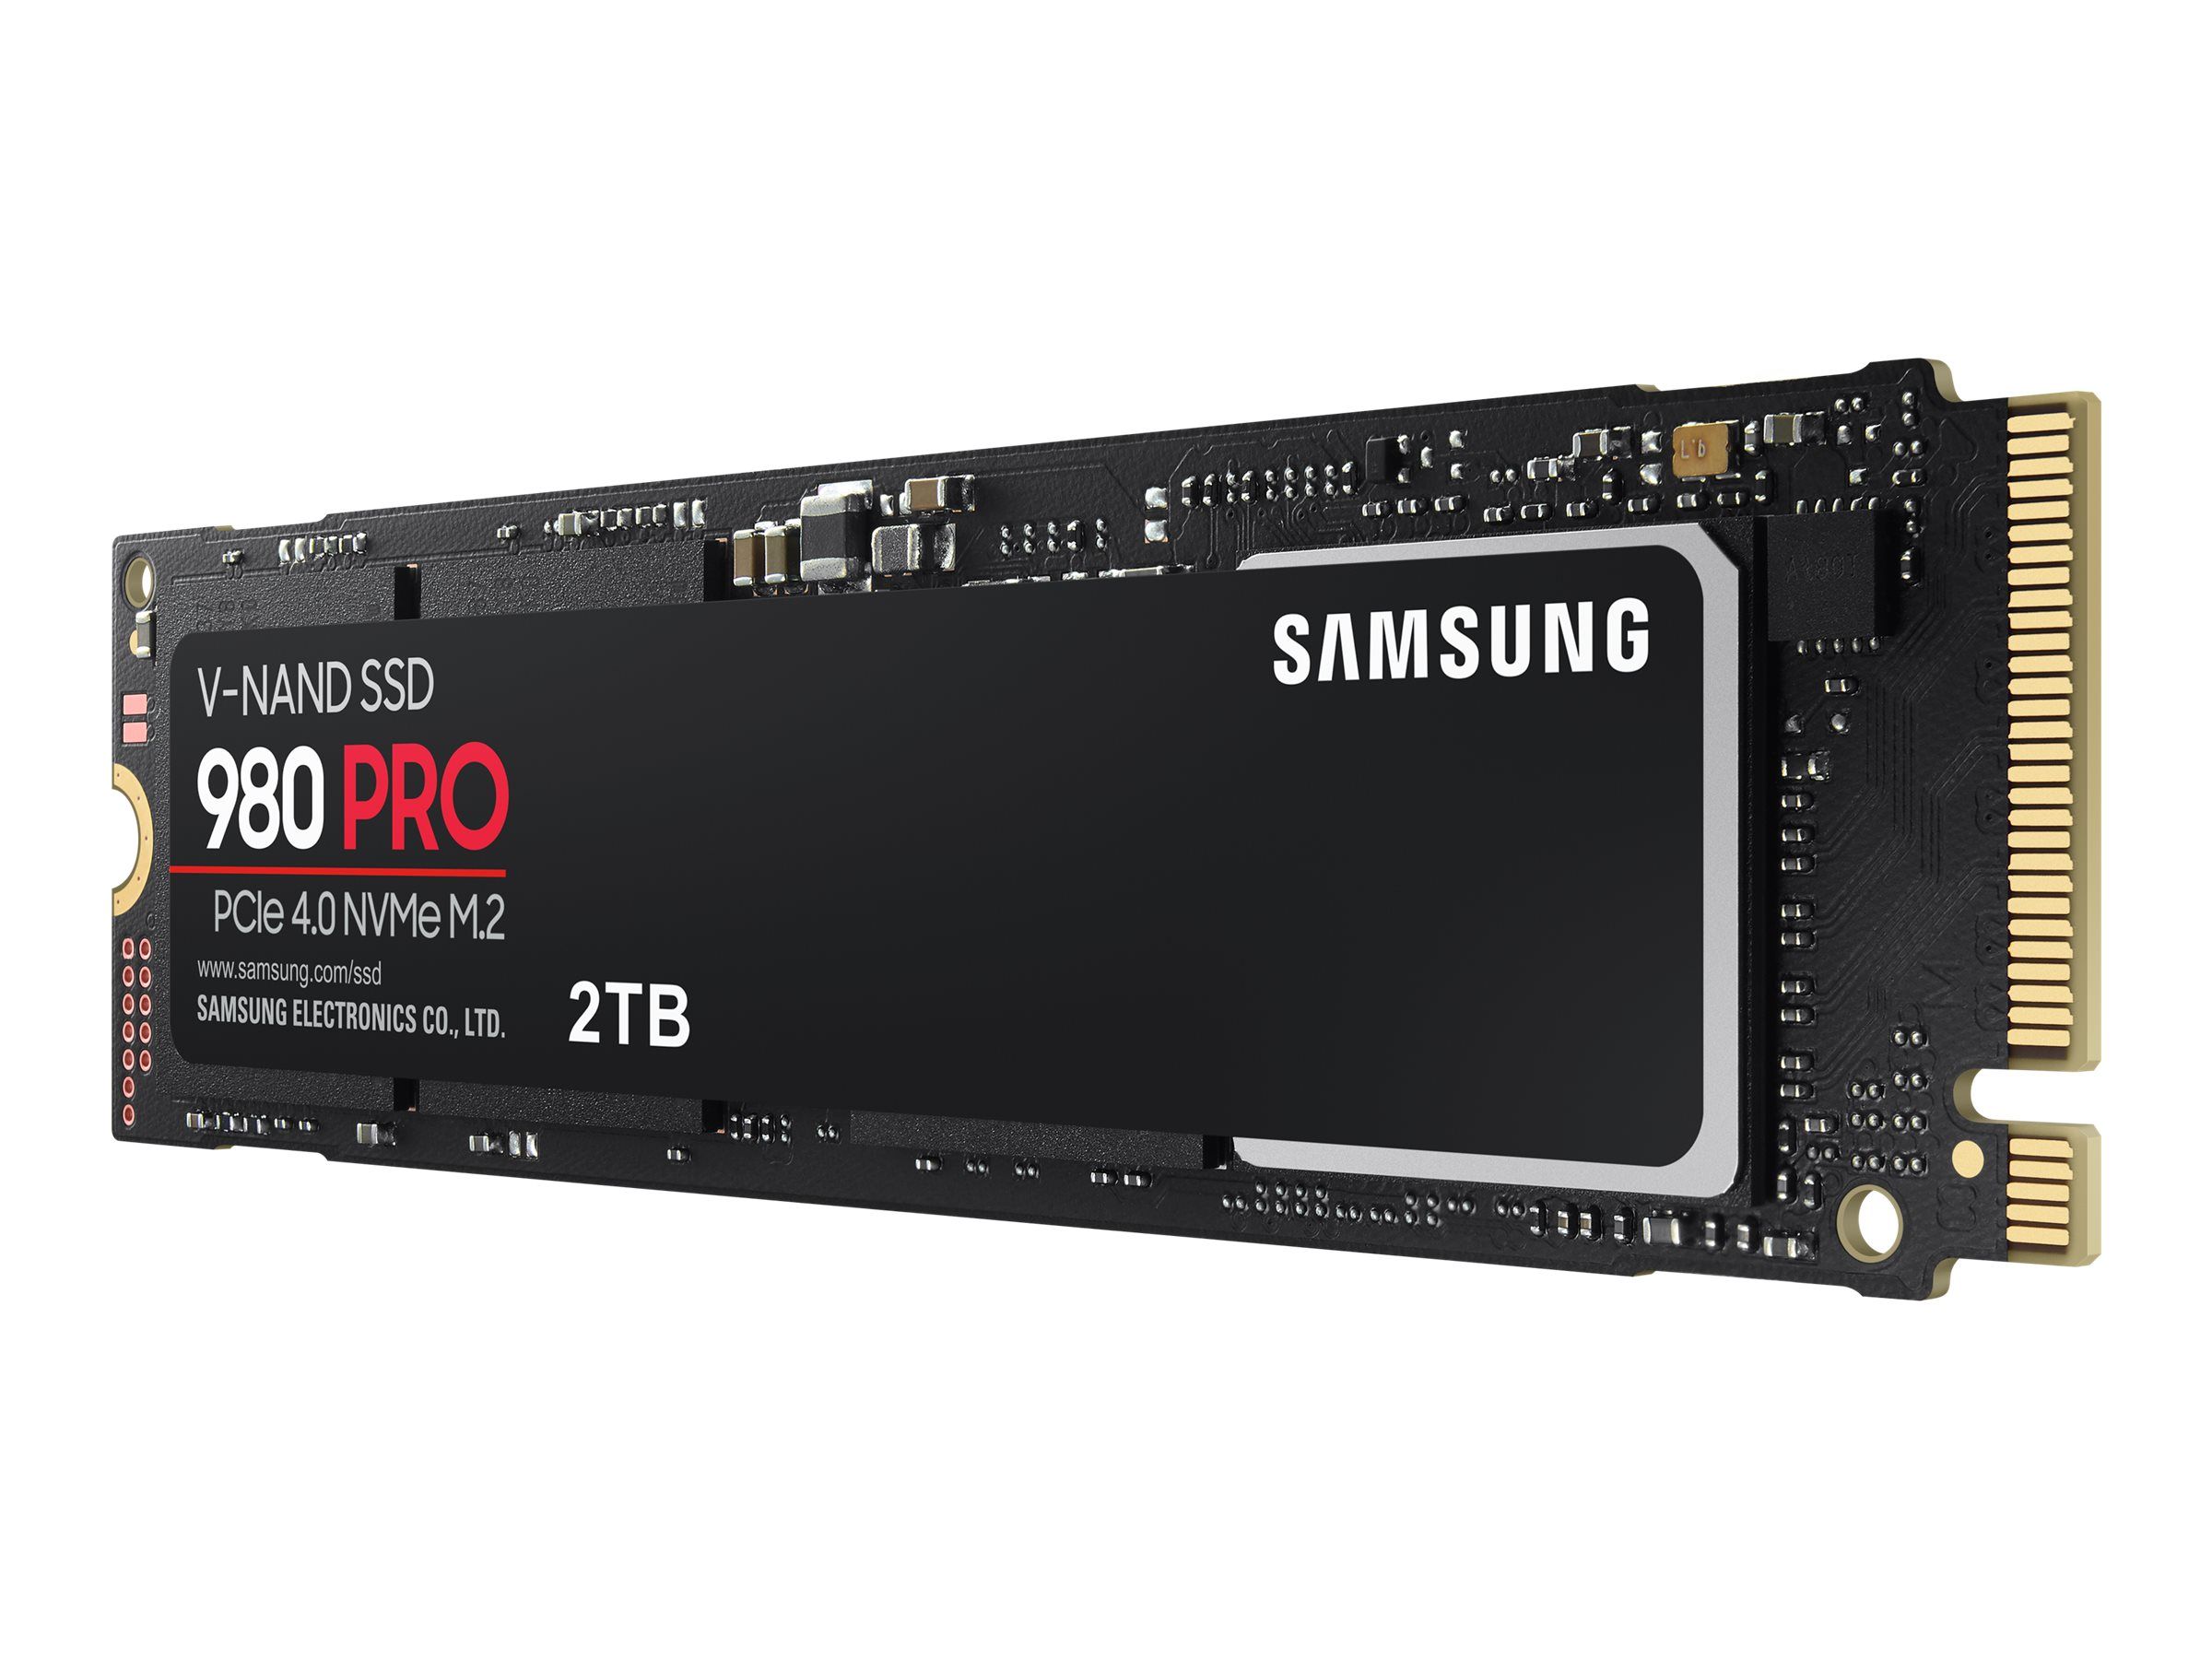 Samsung 980 PRO 2TB SSD PCIe 4.0 NVMe M.2 | Multicom